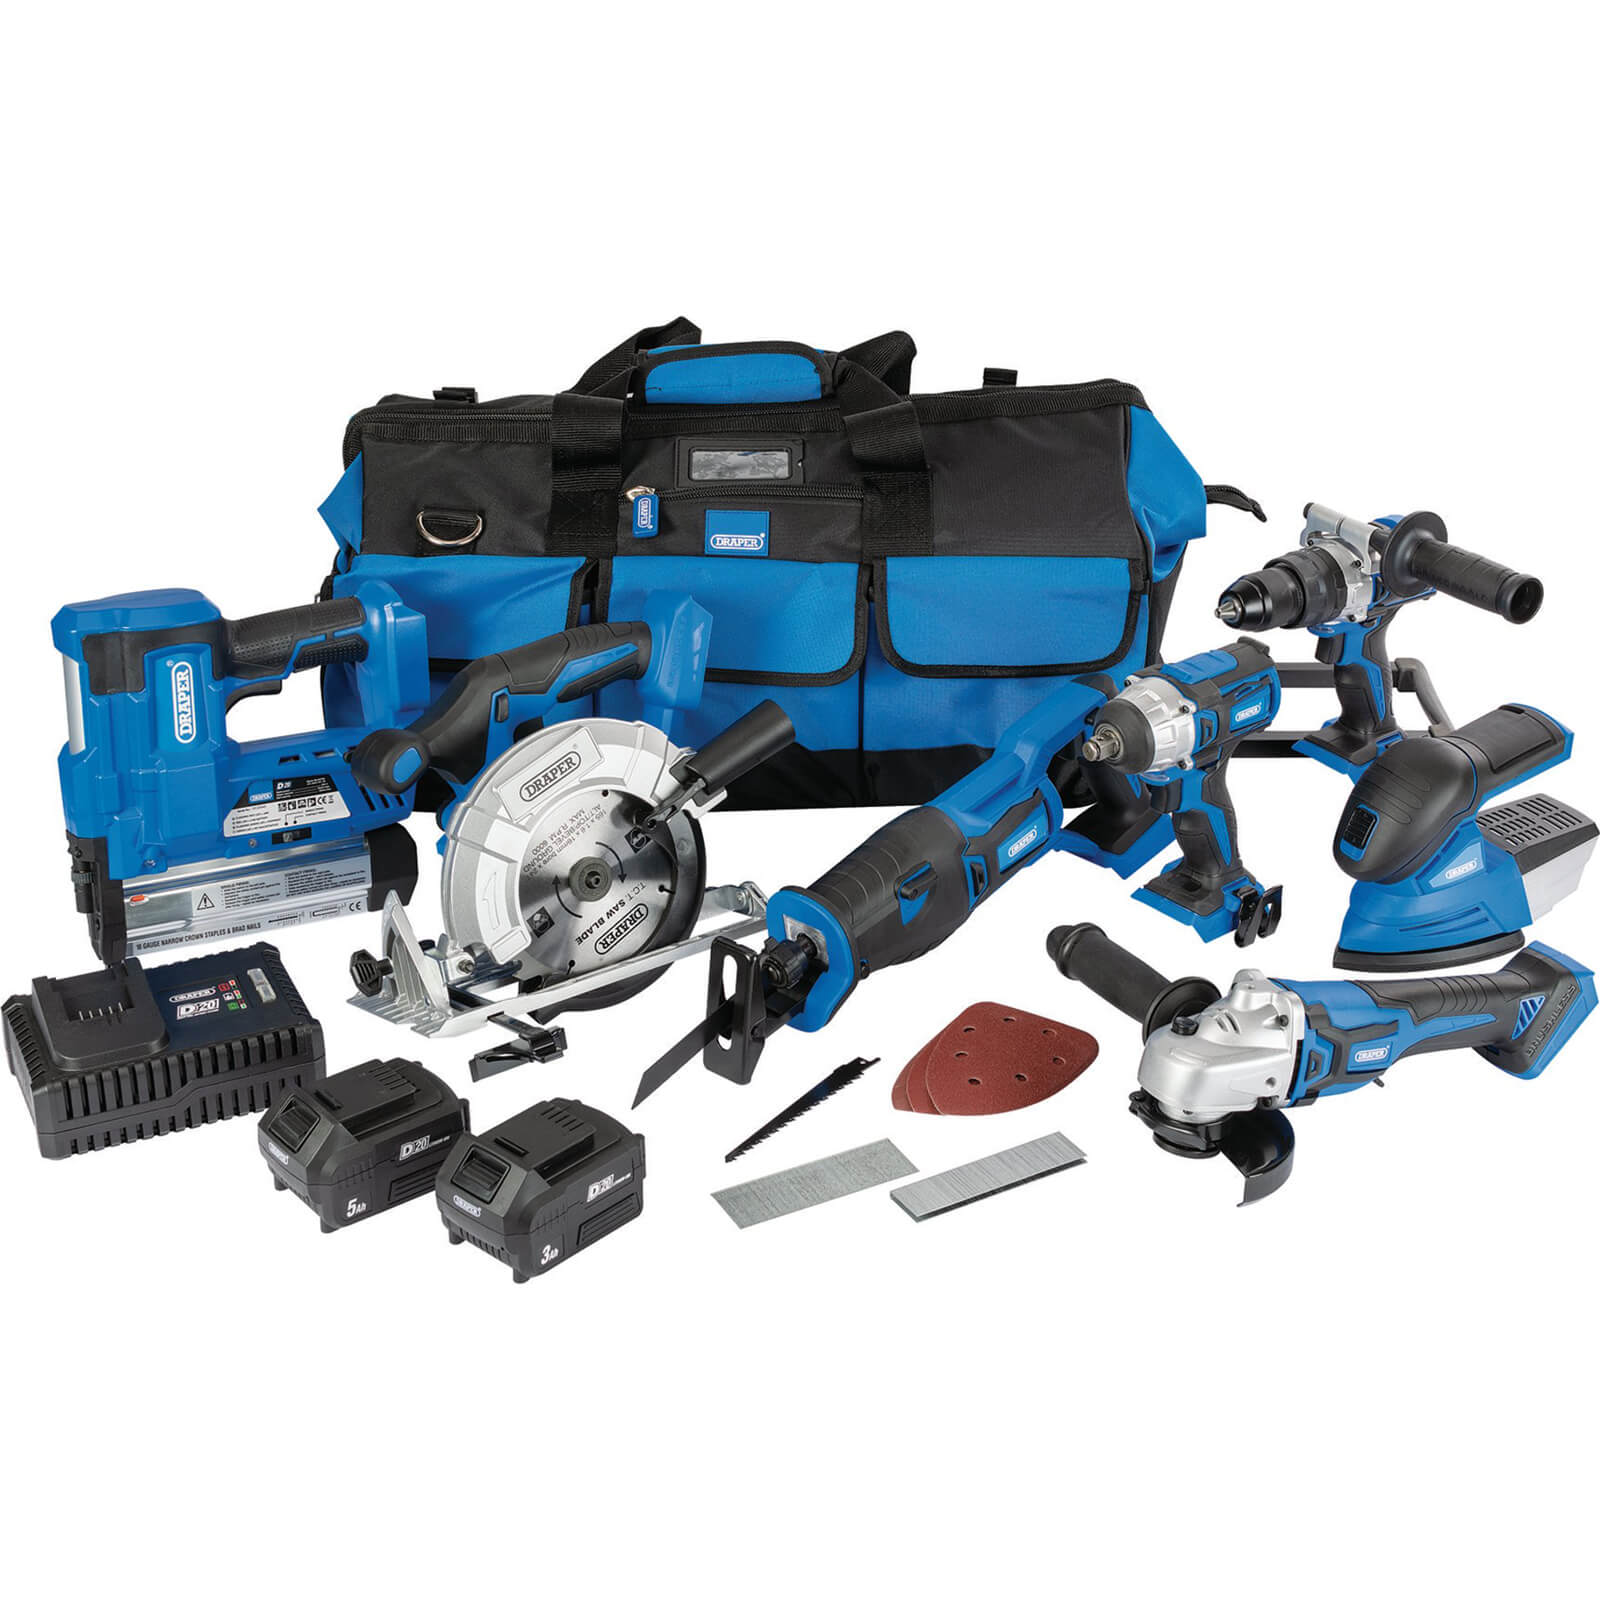 Draper D20 20v Cordless 7 Piece Jumbo Power Tool Kit 1 x 3ah & 1 x 5ah Li-ion Charger Bag